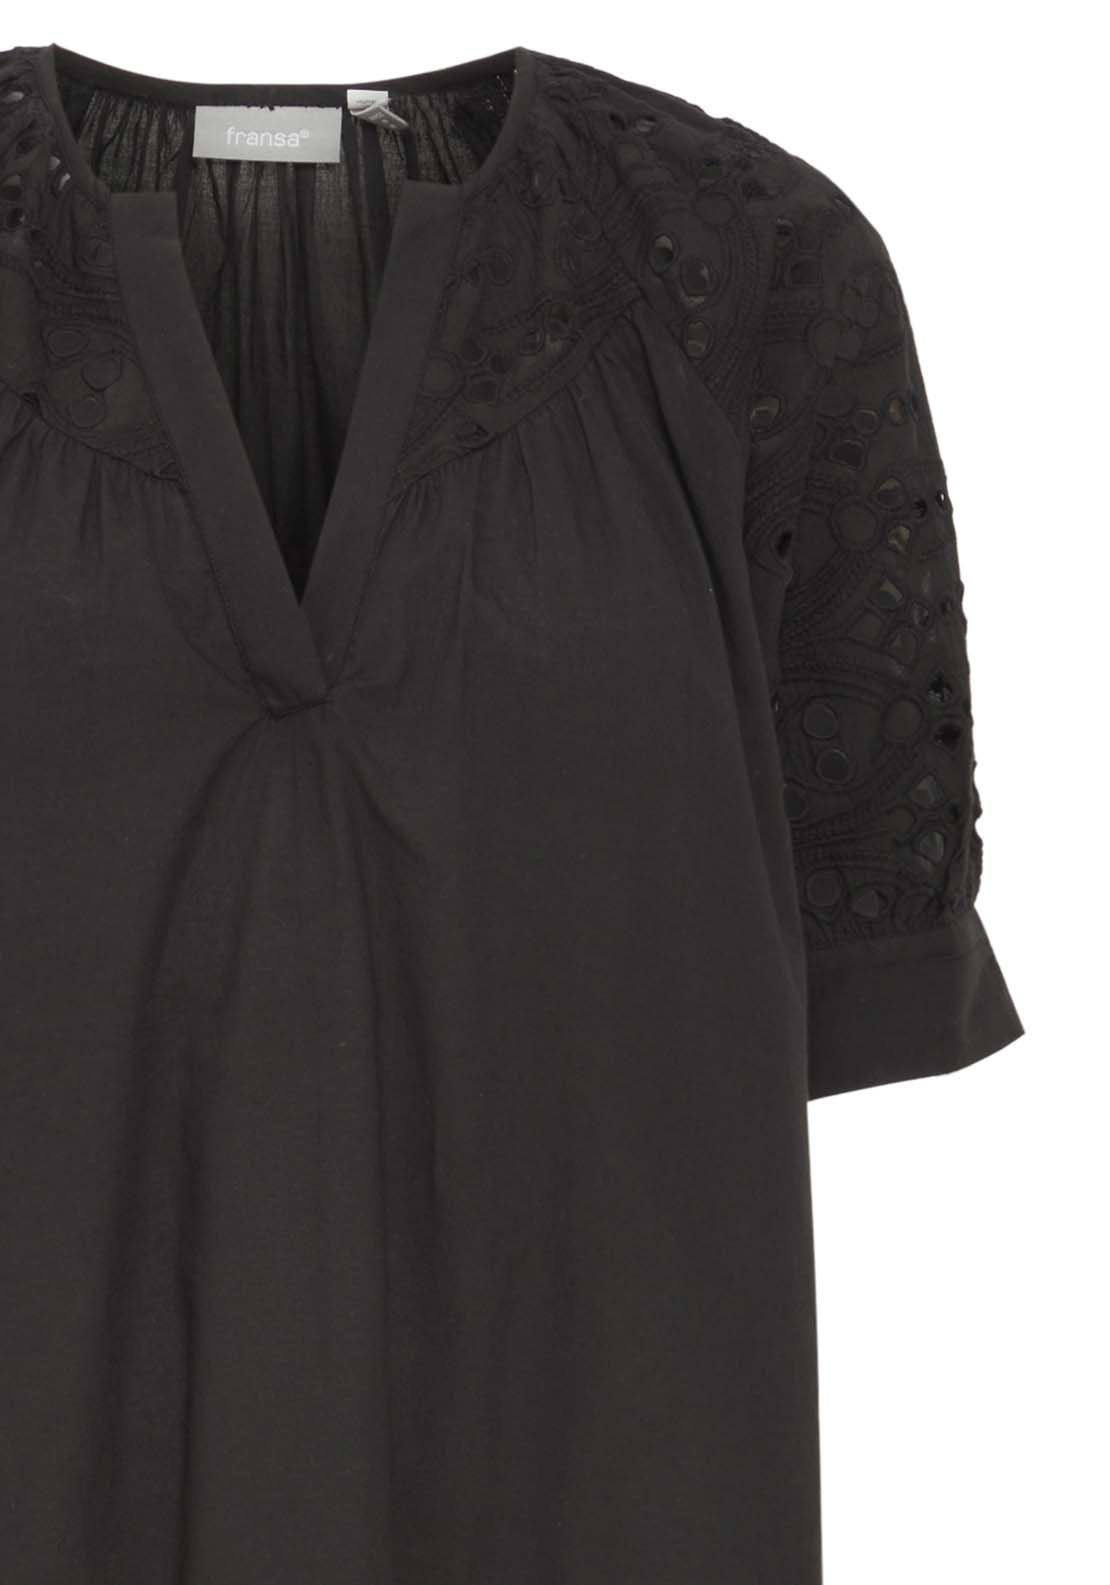 Fransa Light Woven Dress - Black 2 Shaws Department Stores